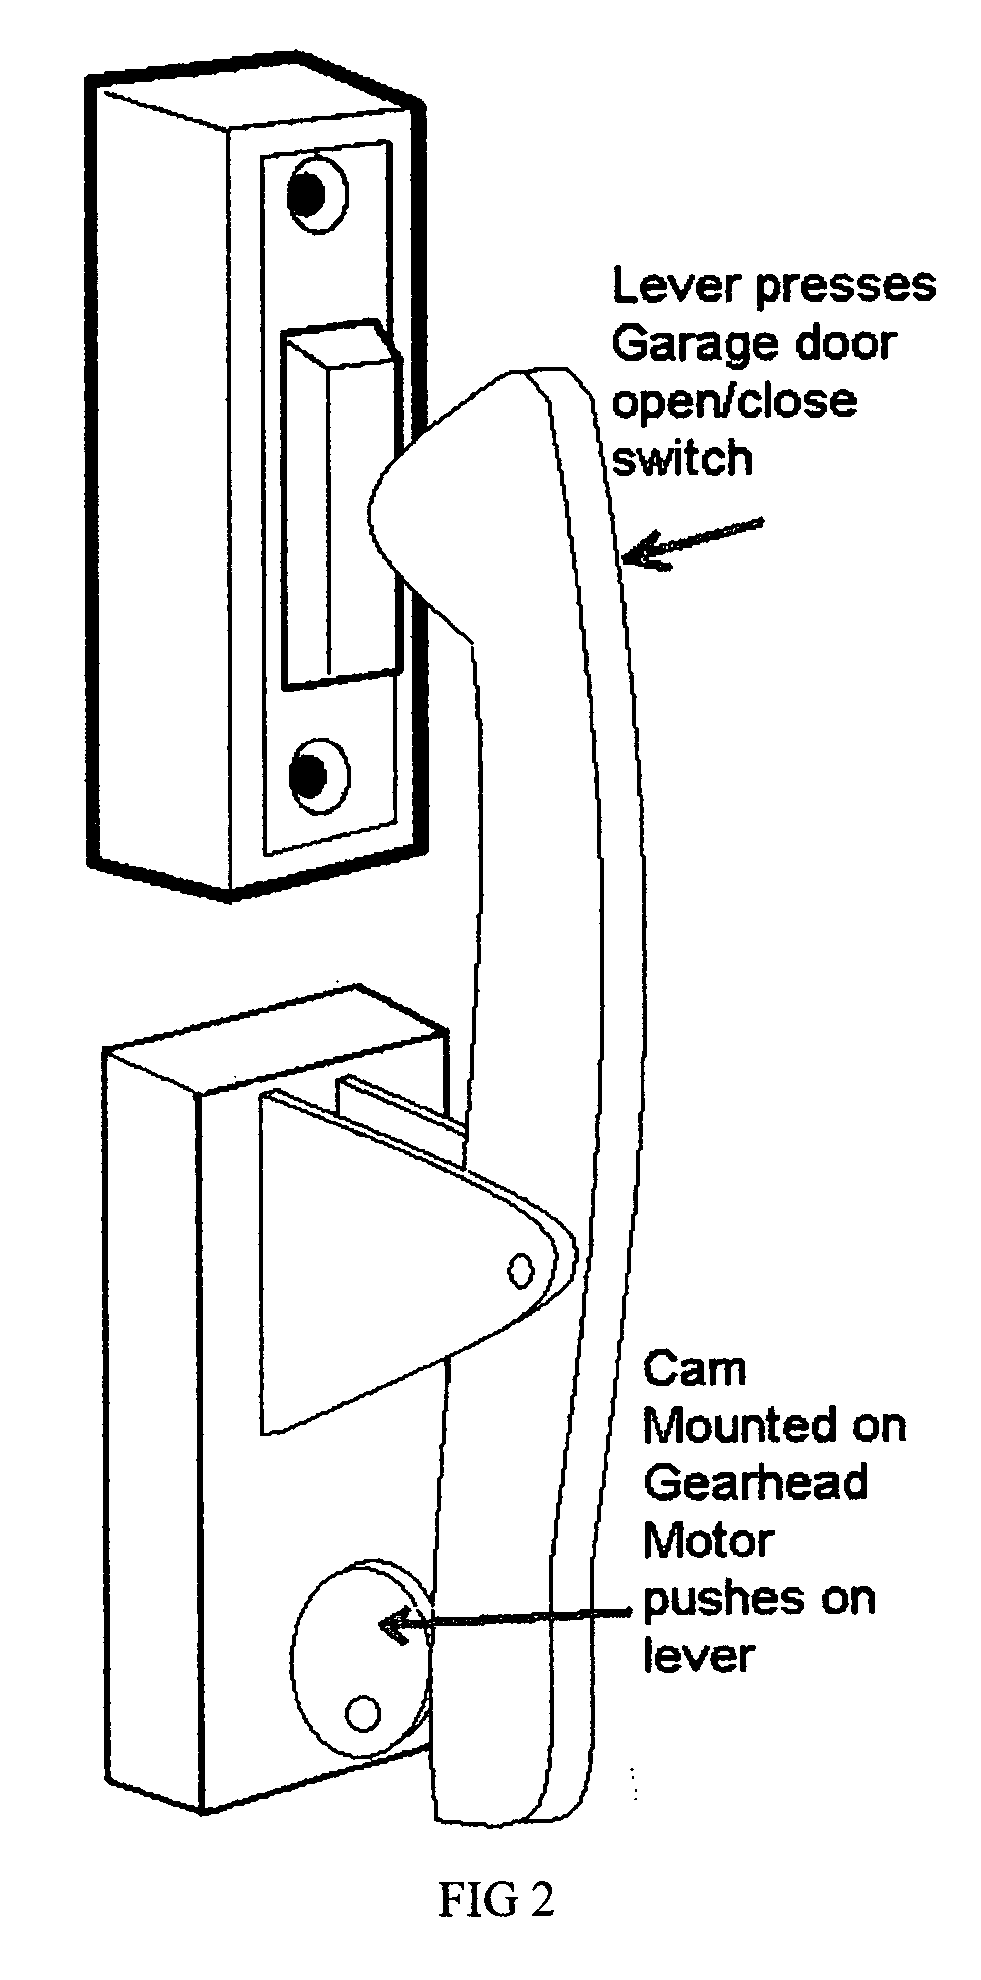 Automatic garage door closing device